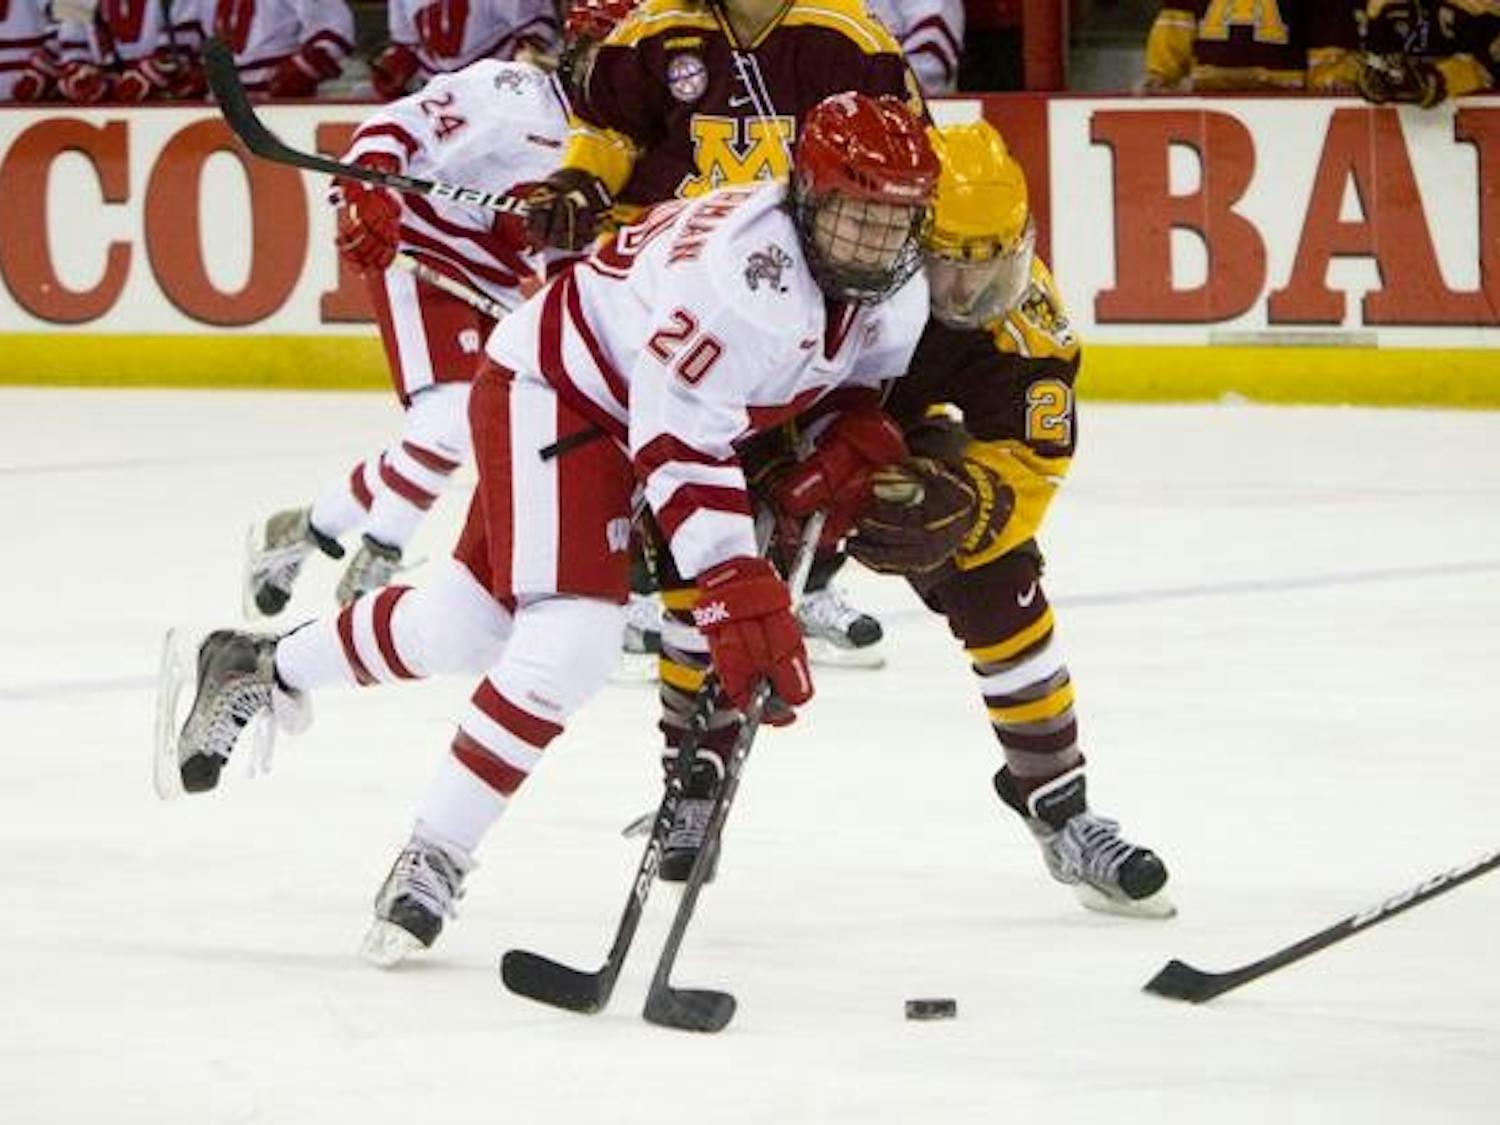 College hockey's best set to clash in Border Battle